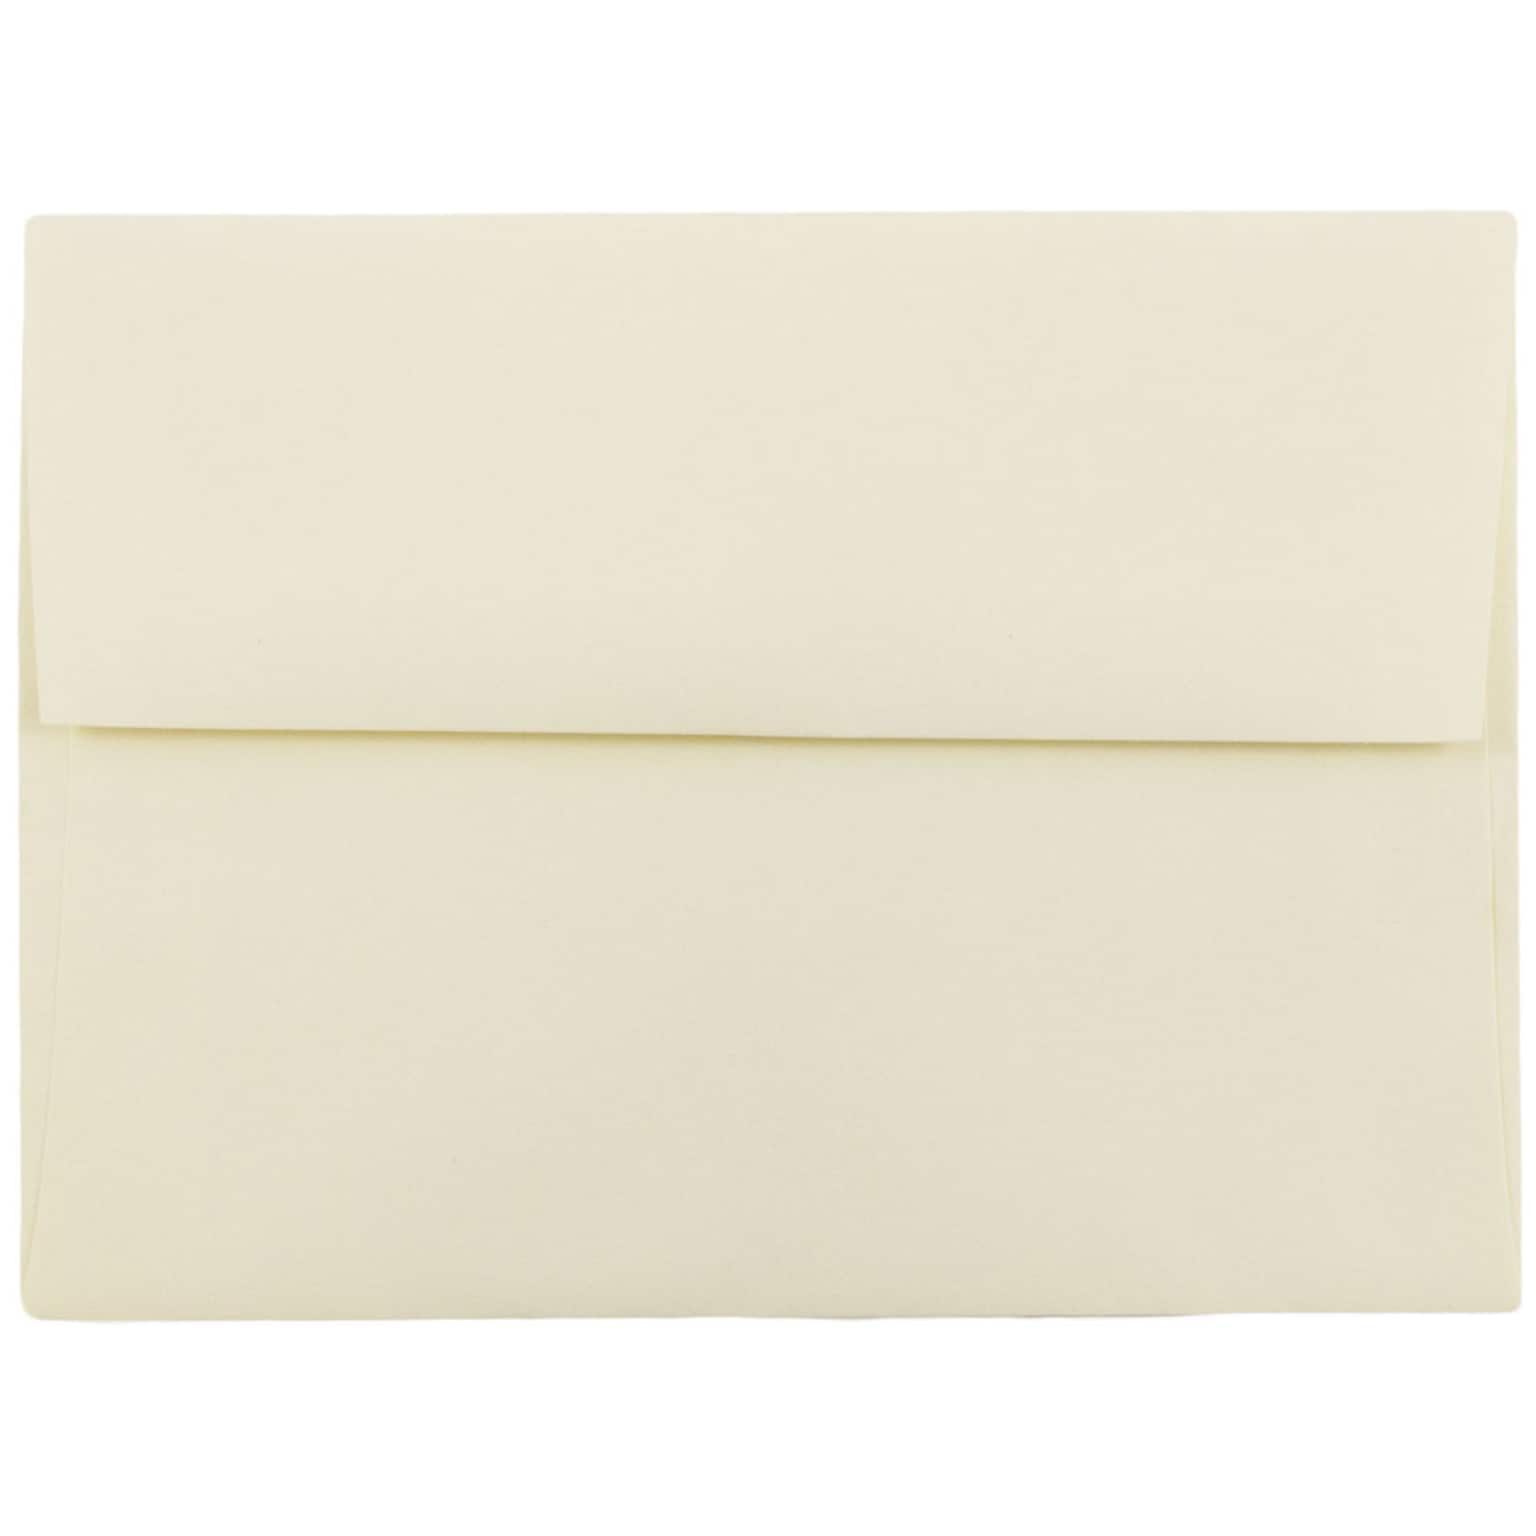 JAM Paper A6 Strathmore Invitation Envelopes, 4.75 x 6.5, Ivory Wove, Bulk 1000/Carton (900913185B)